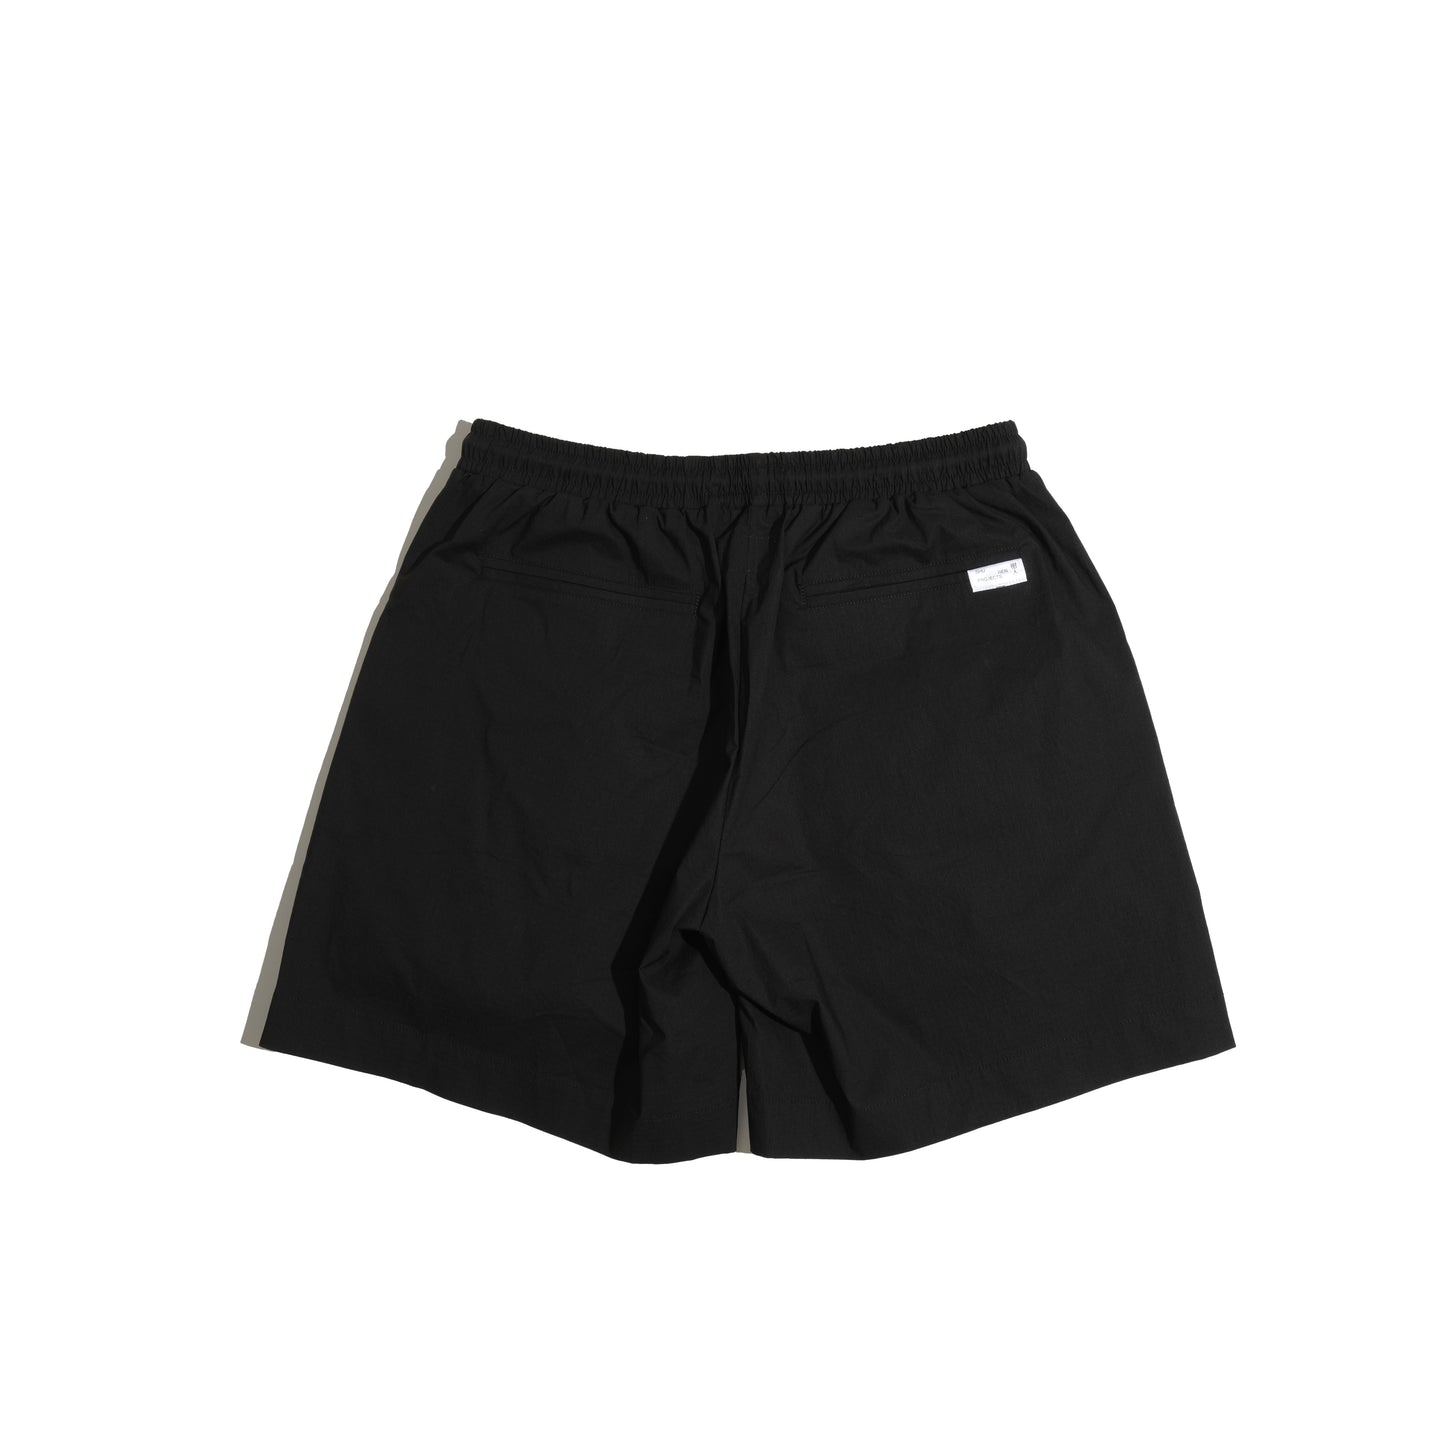 Ez Shorts / Cotton Nylon - Black